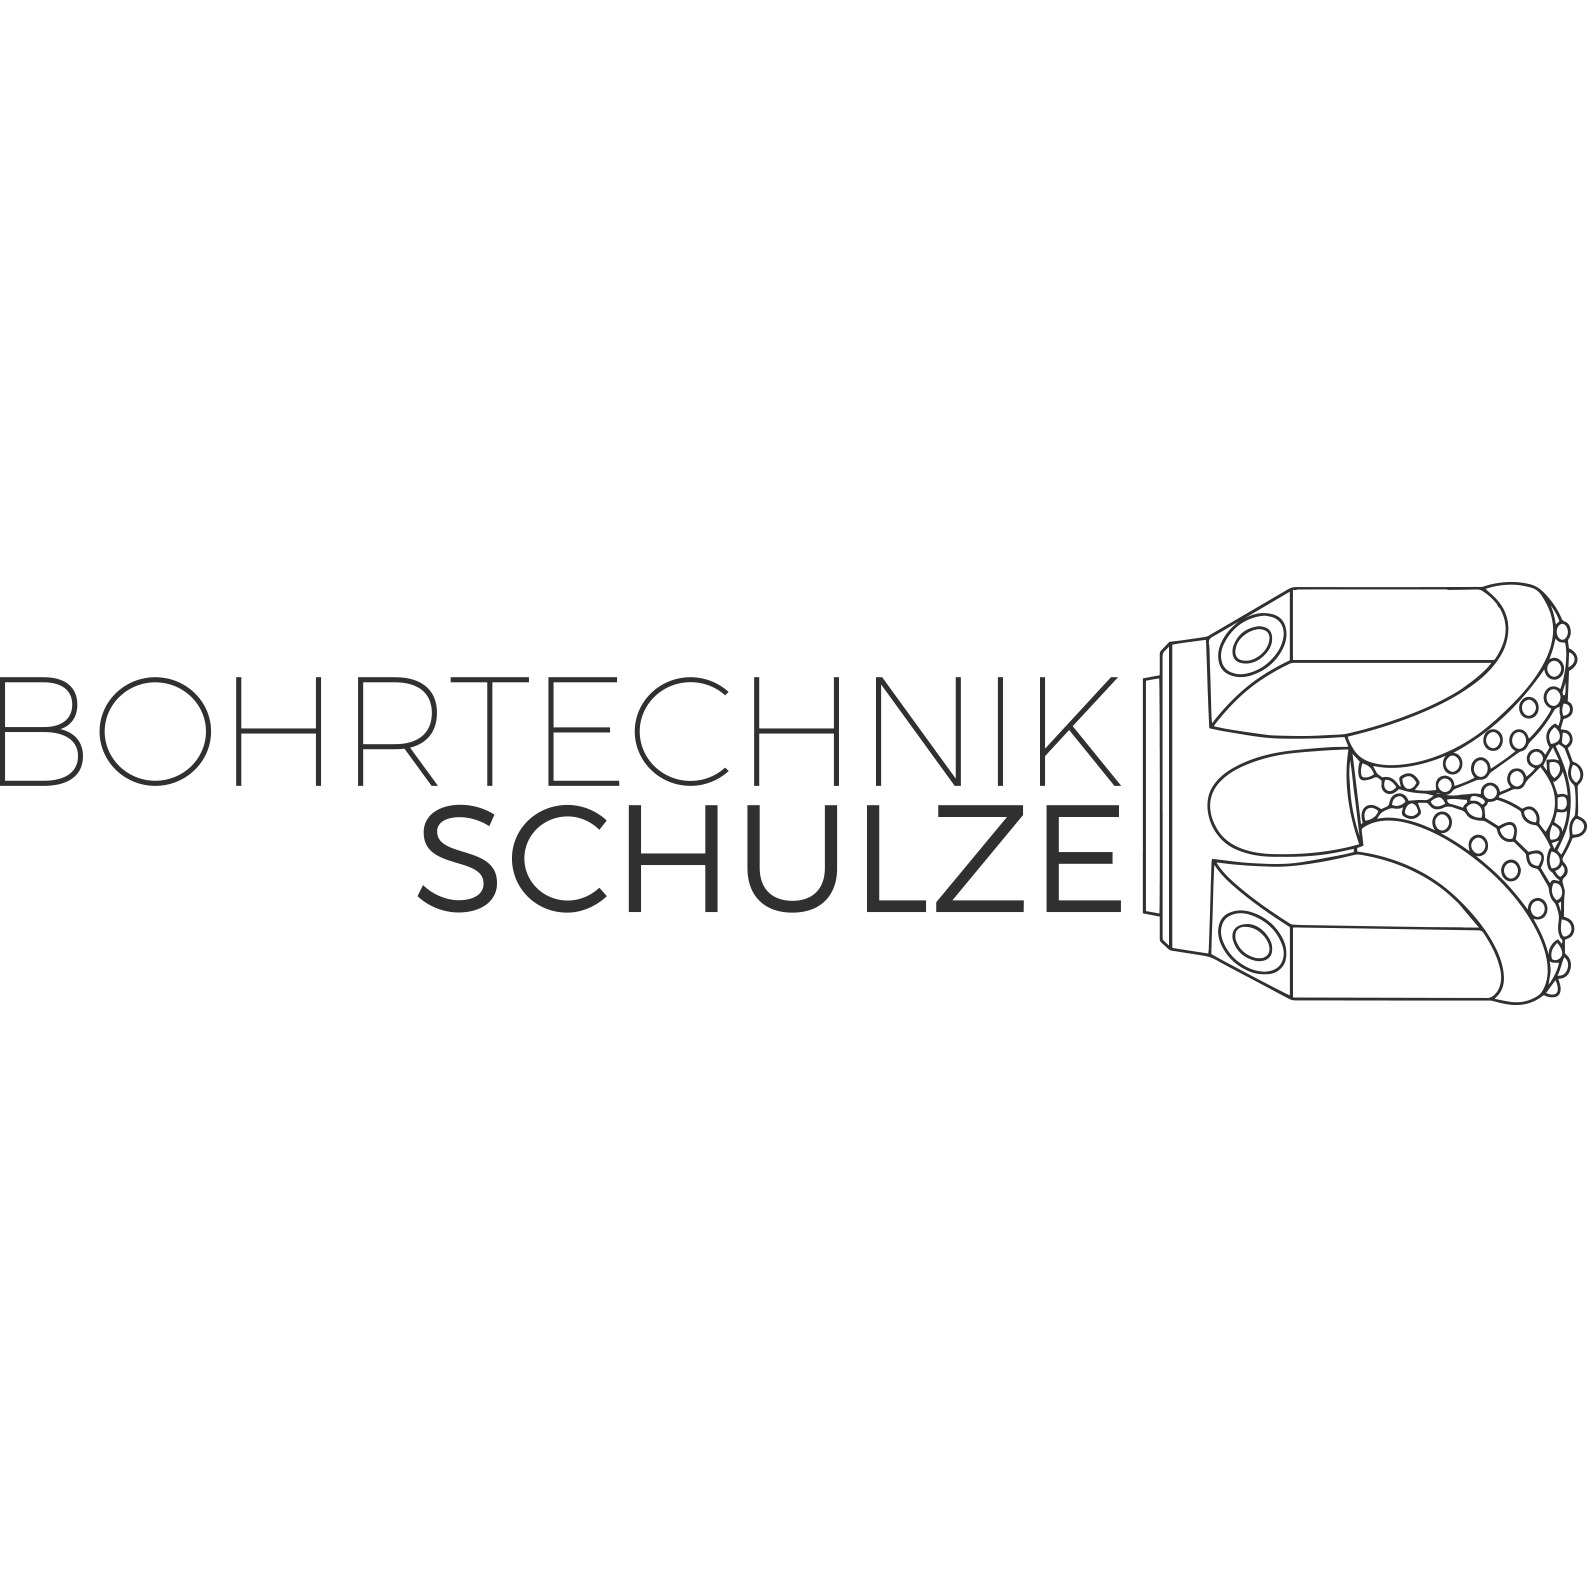 Bohrtechnik Schulze GmbH & Co. KG Inh. Christian Schulze in Alperstedt - Logo